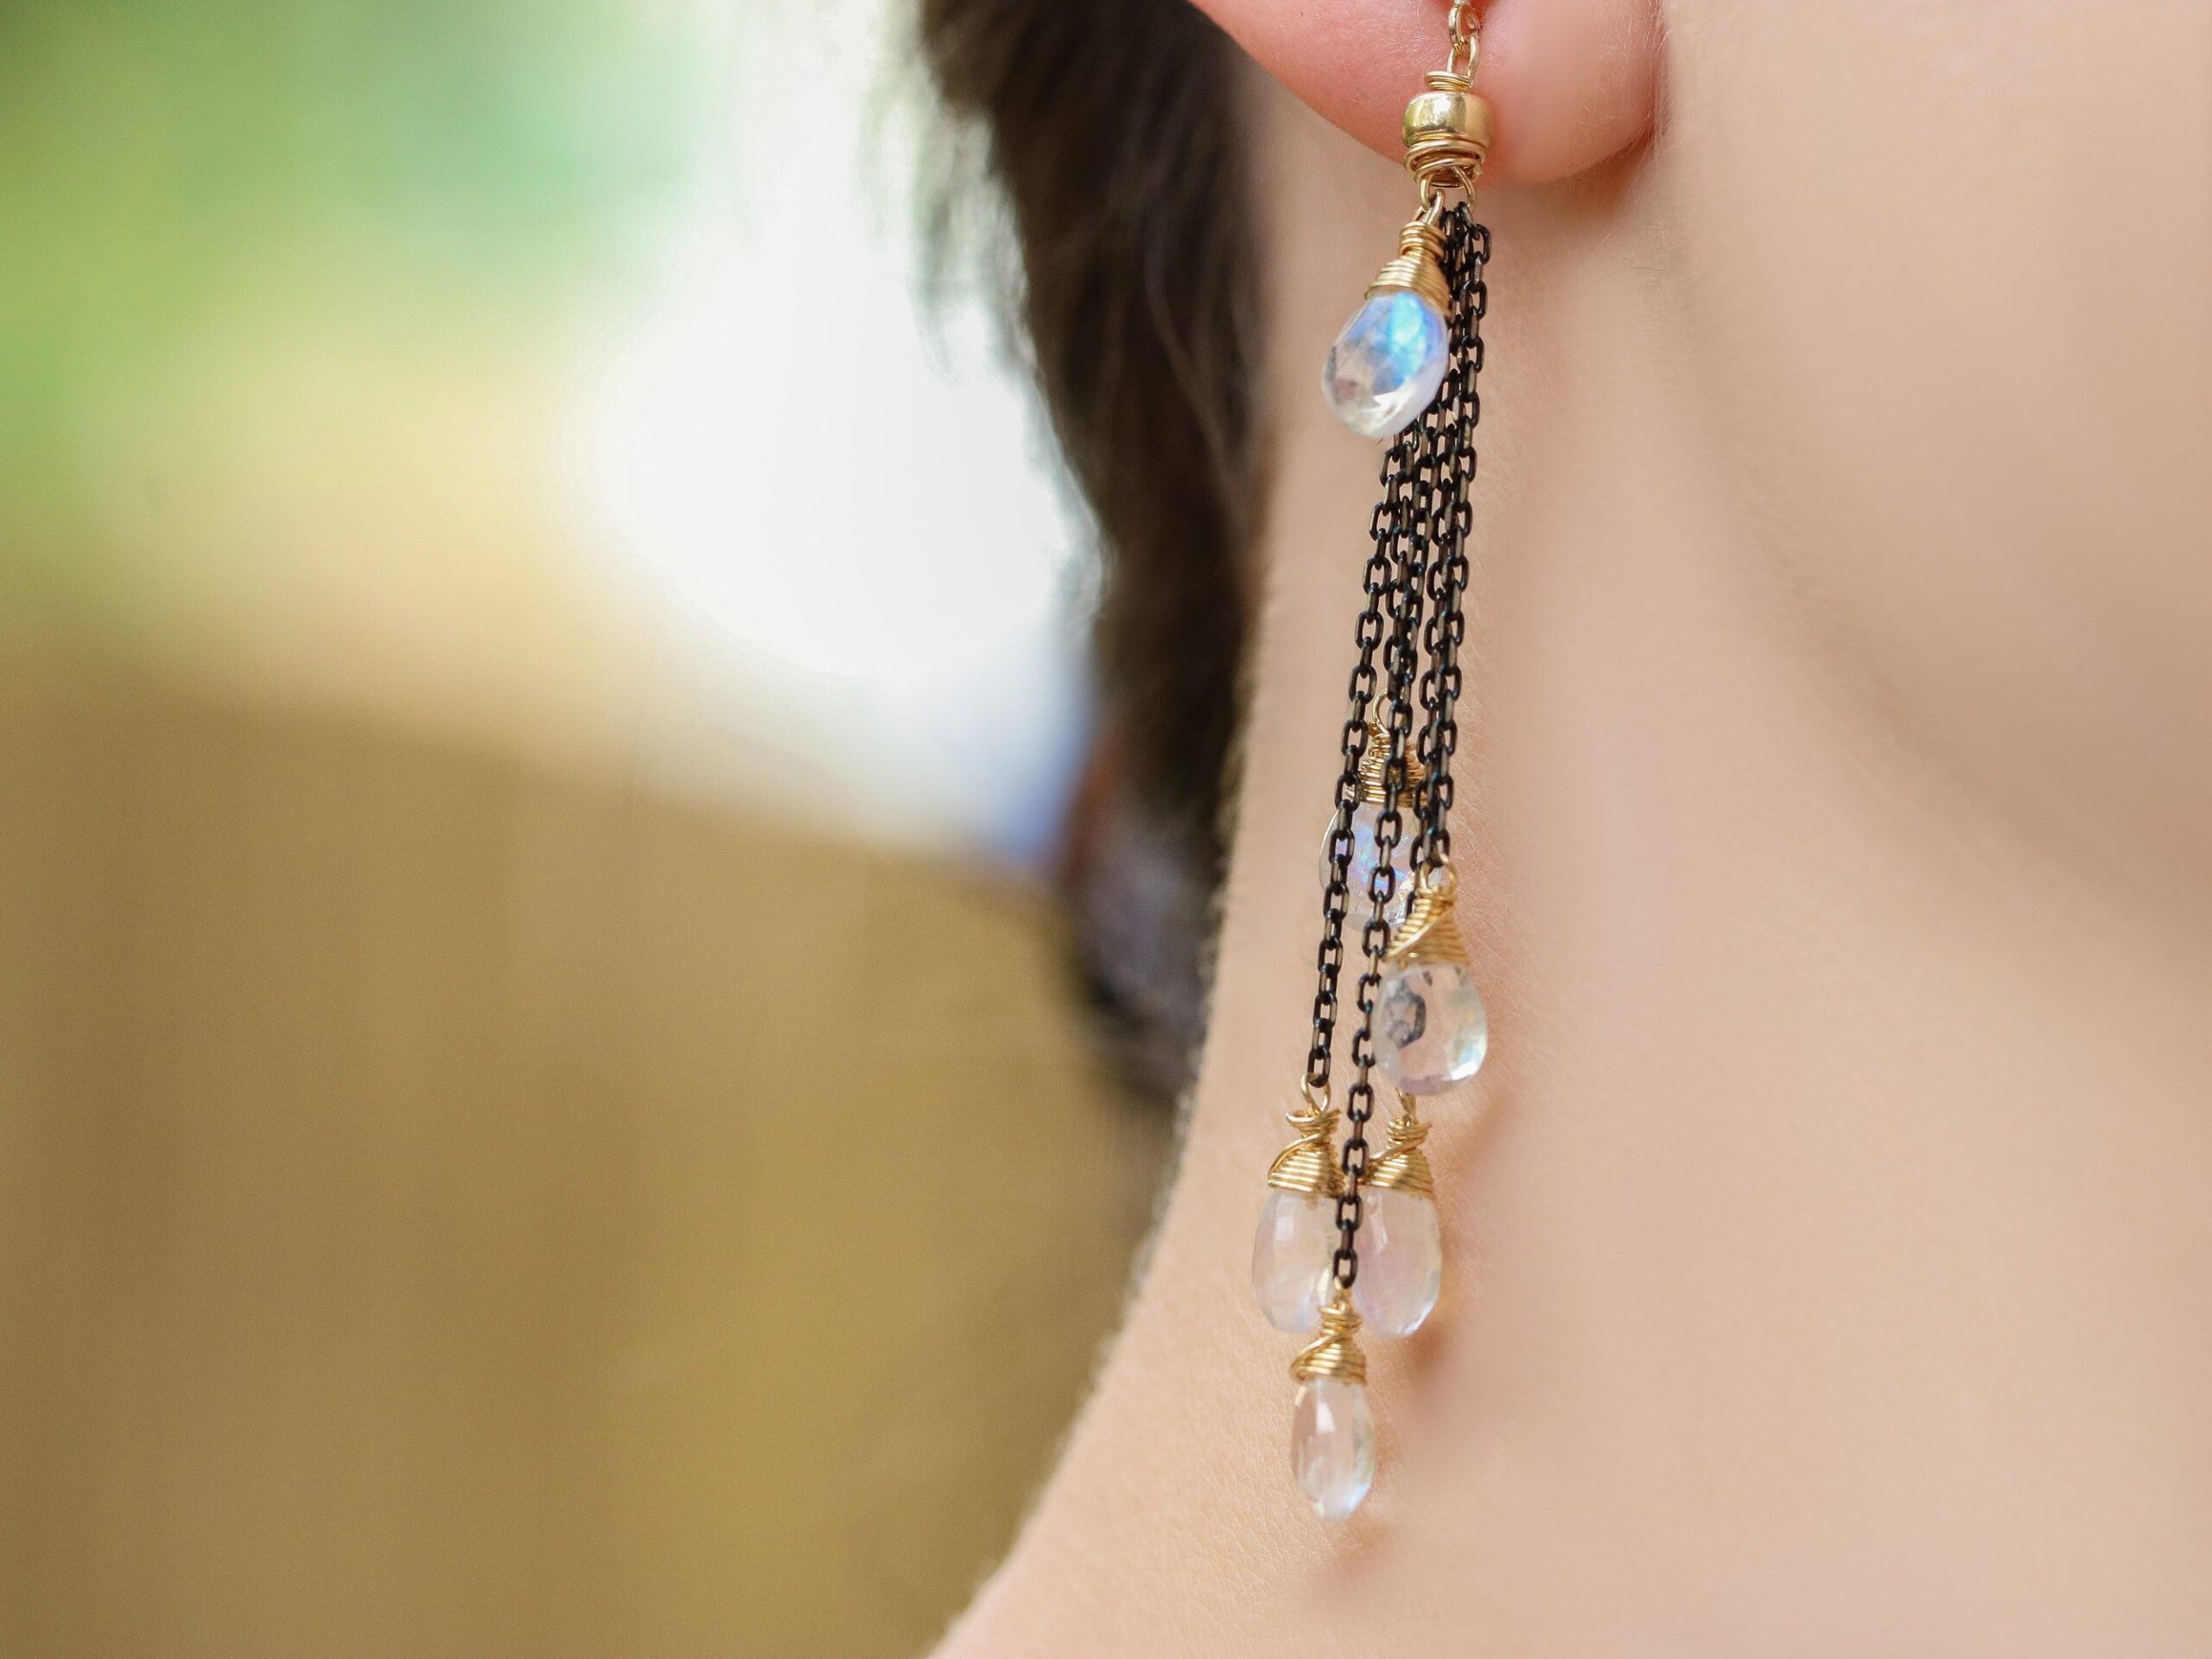 Rainbow Moonstone Earrings with Mixed Metals, Moonstone Cascade Earrings